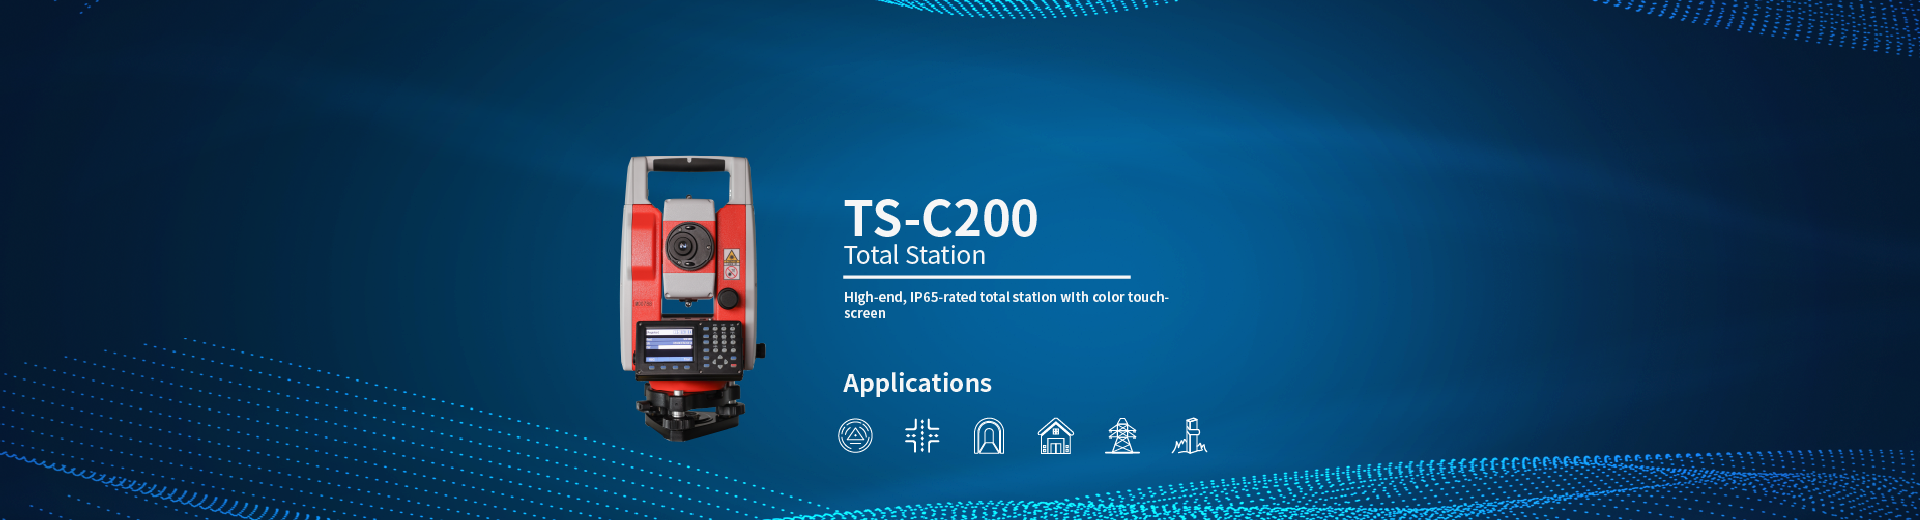 TS-C200 Total Station